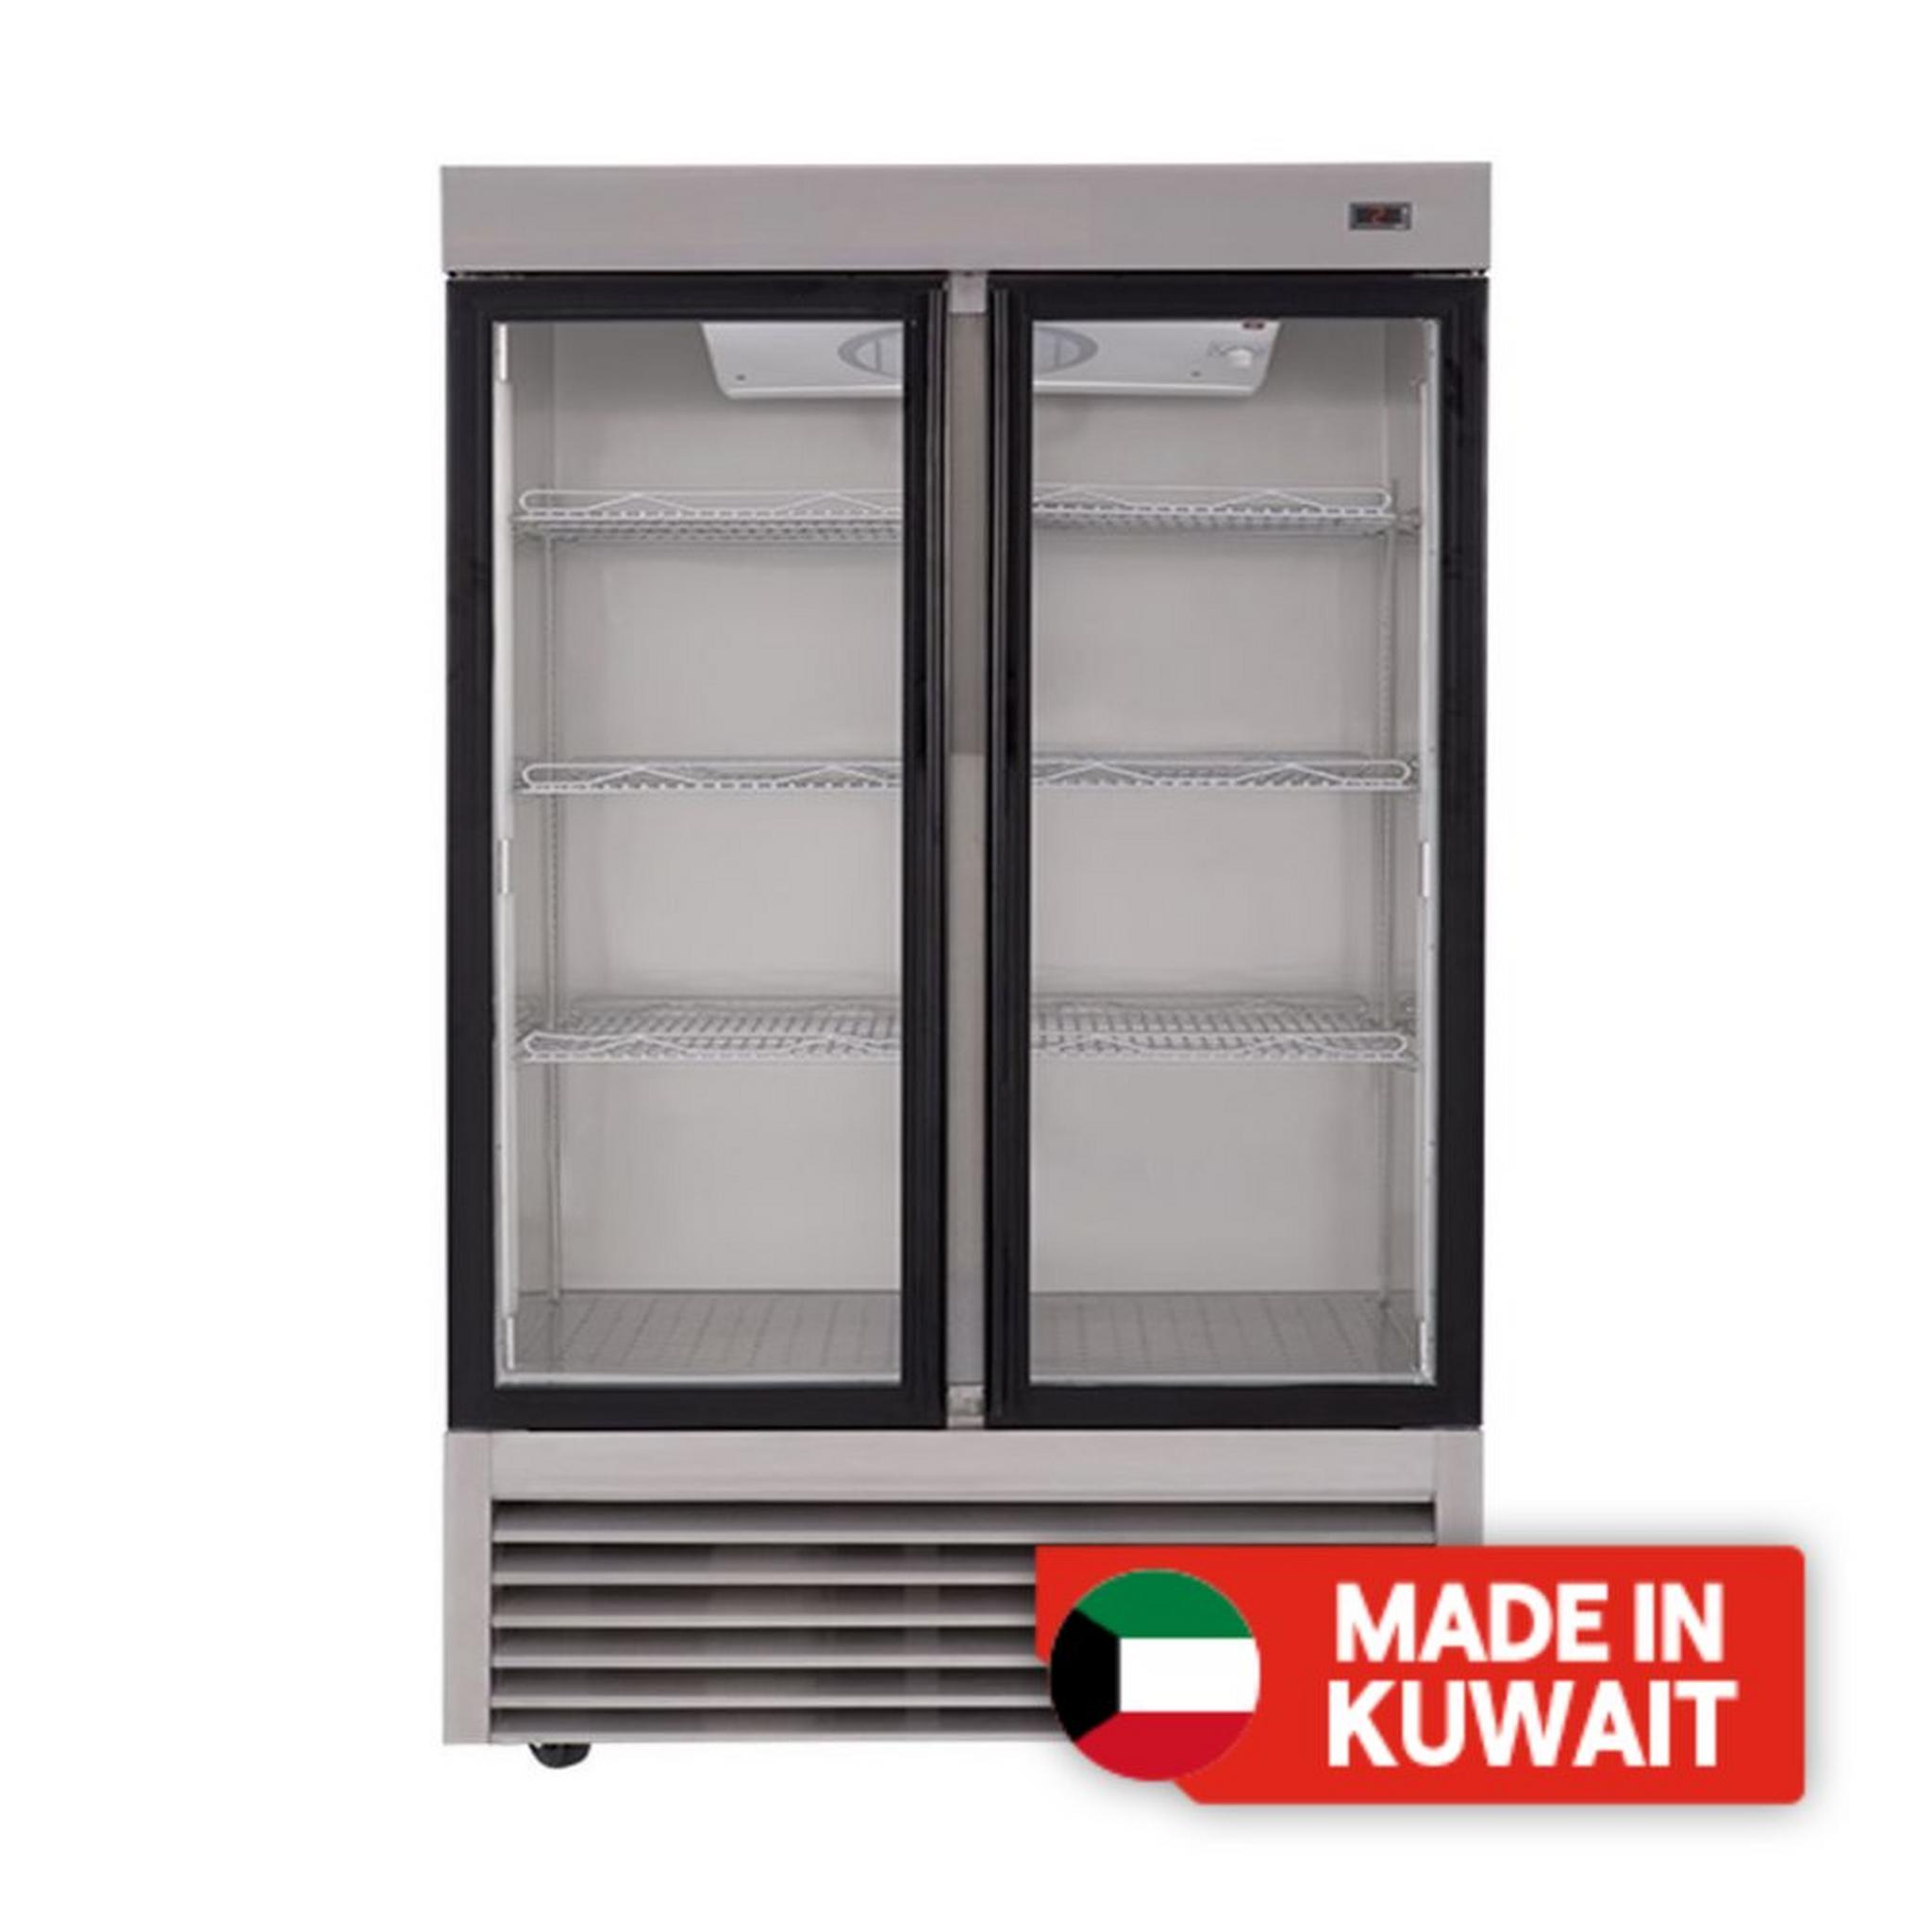 Wansa Window Refrigetor, 34CFT, 950-Liters, 2GDHAS - Stainless Steel